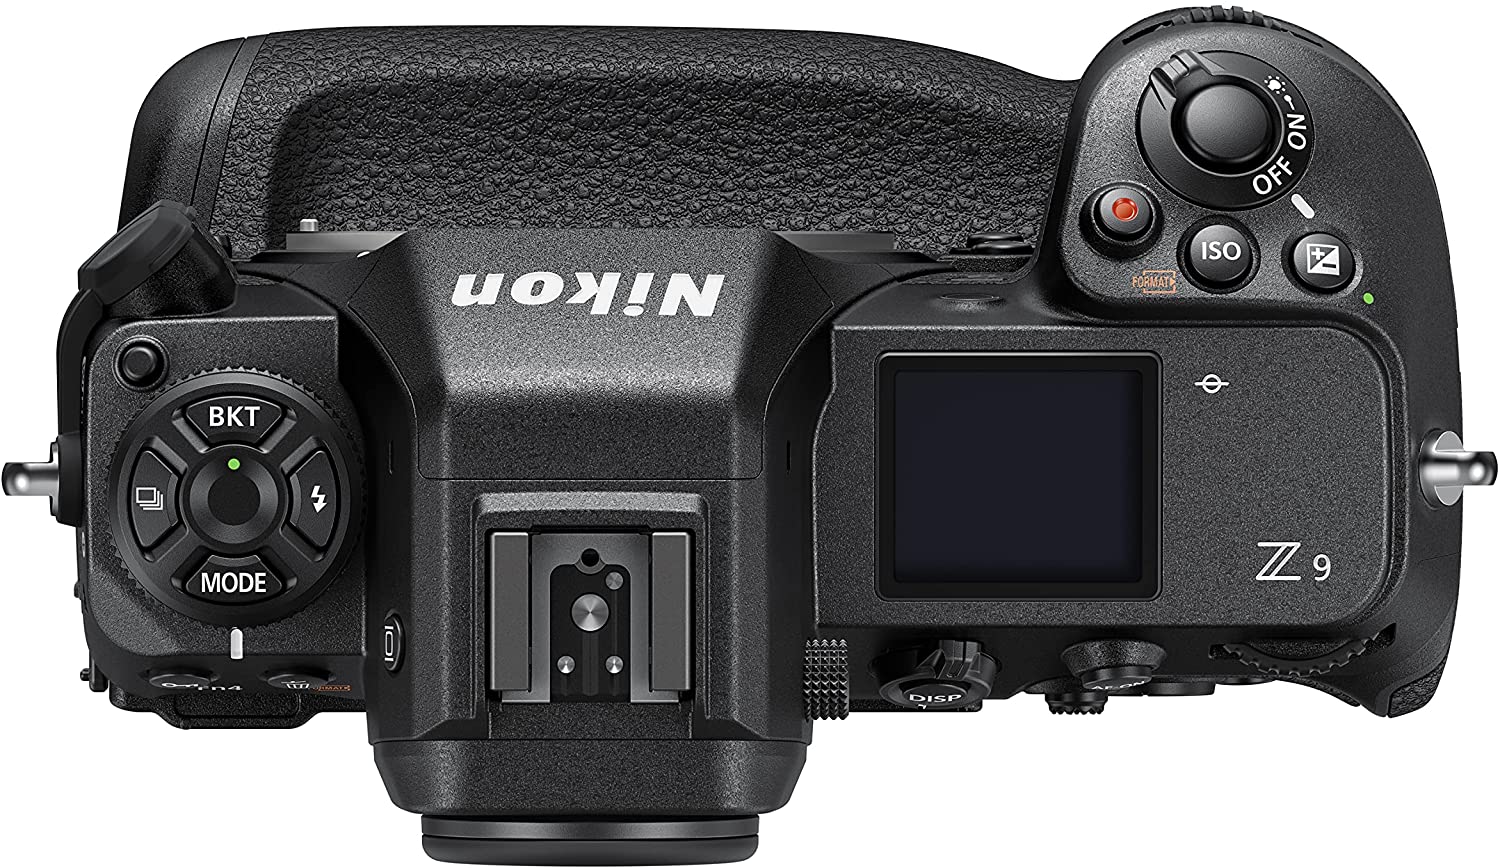 Nikon Z9 Mirrorless Camera (1669) with 24-200mm Lens + 32GB XQD Card (INTL)